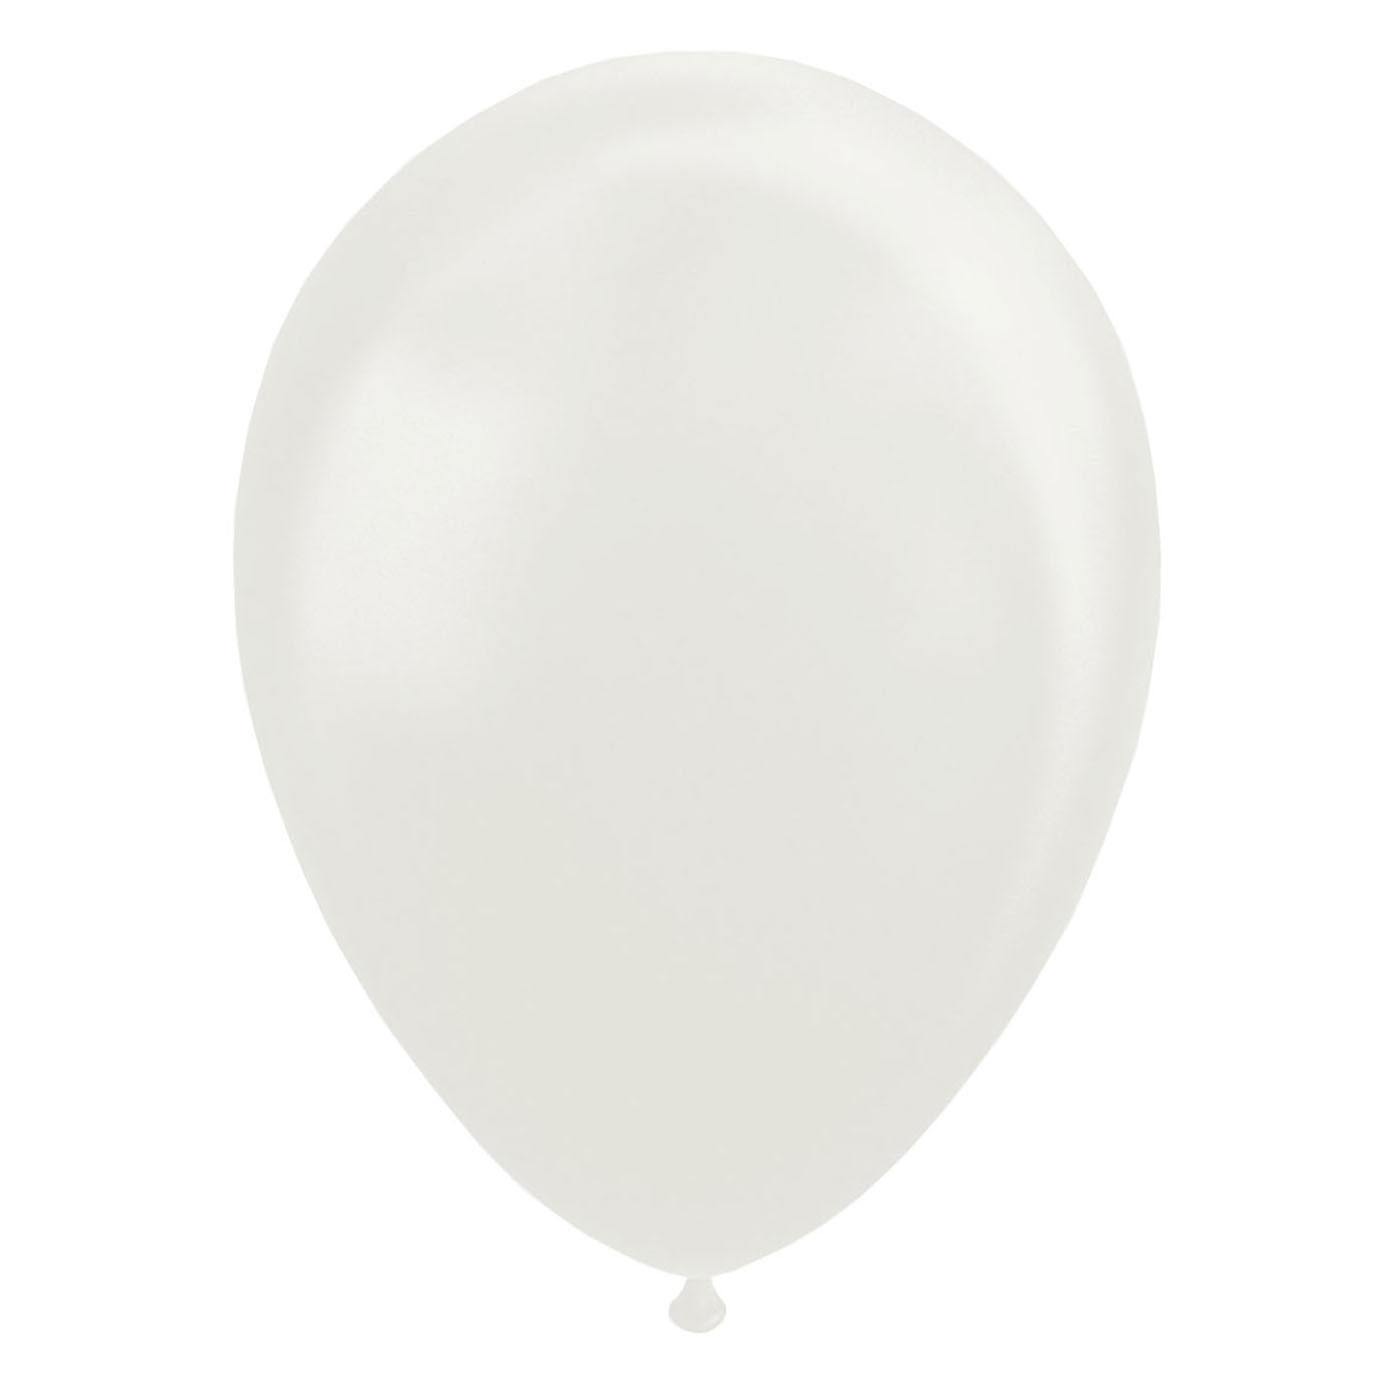 Ballonnen Pearl Wit 30cm, 10st.